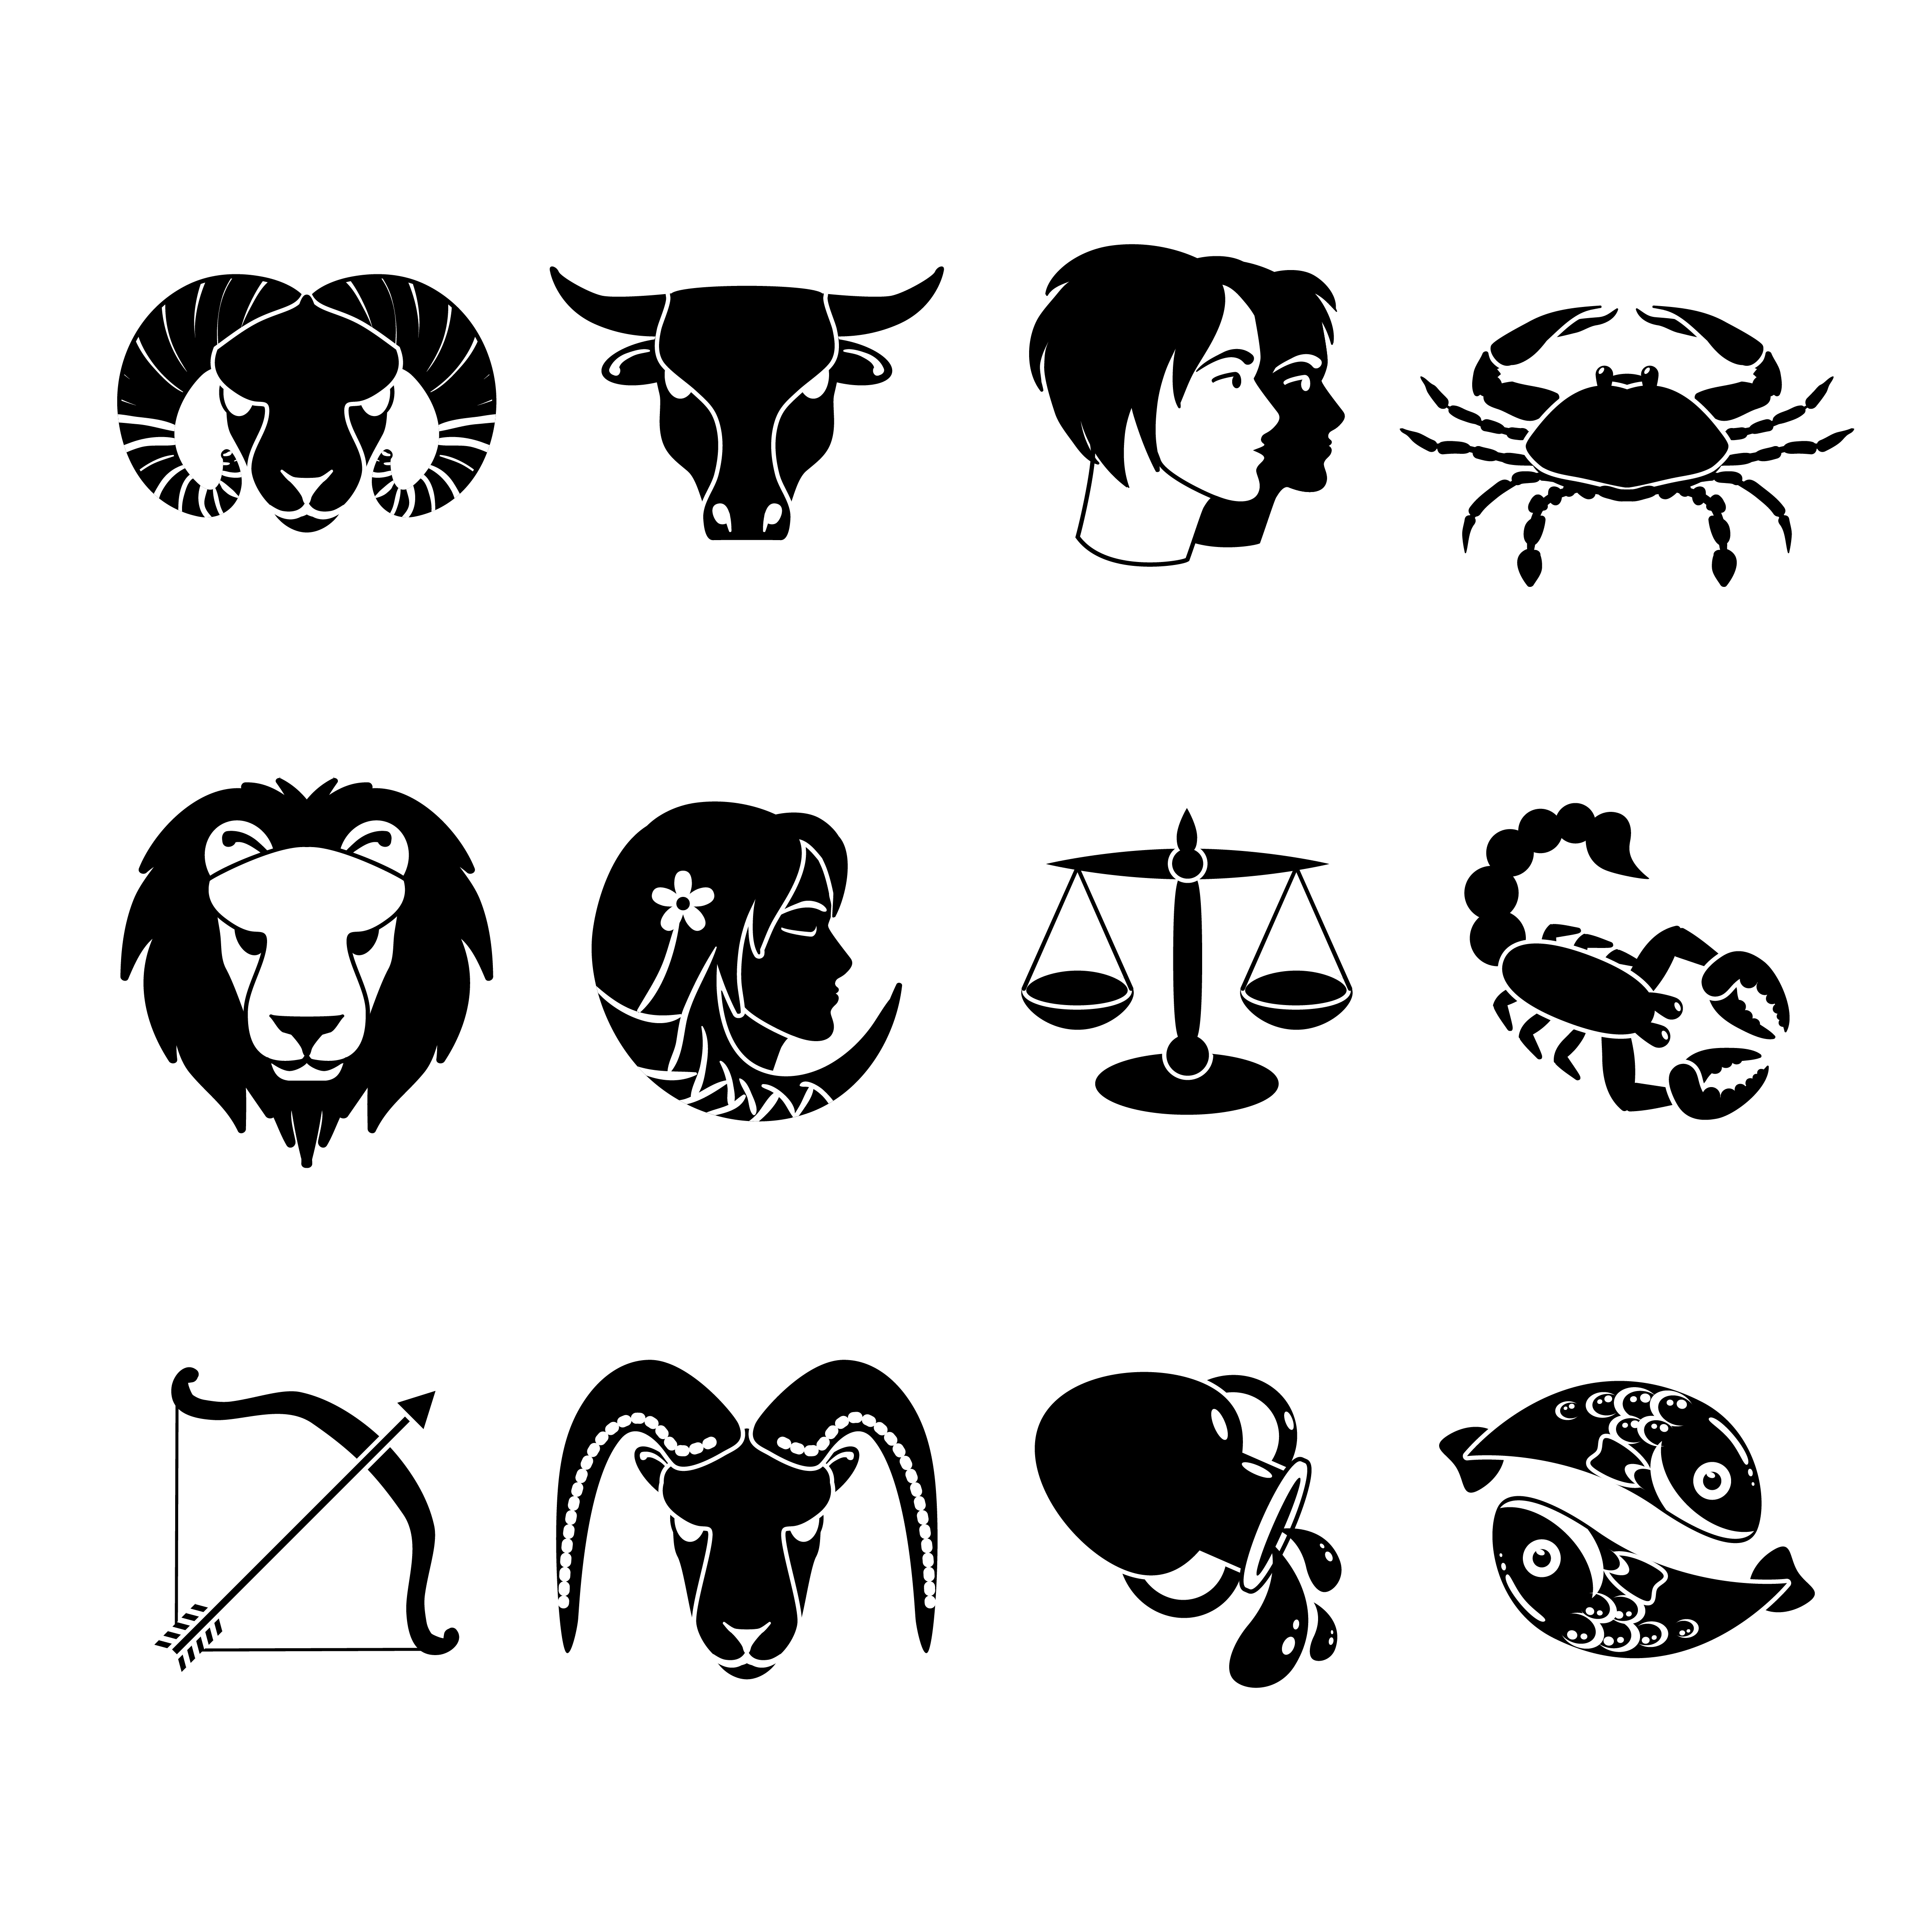 Download Zodiac signs icons set black - Download Free Vectors ...